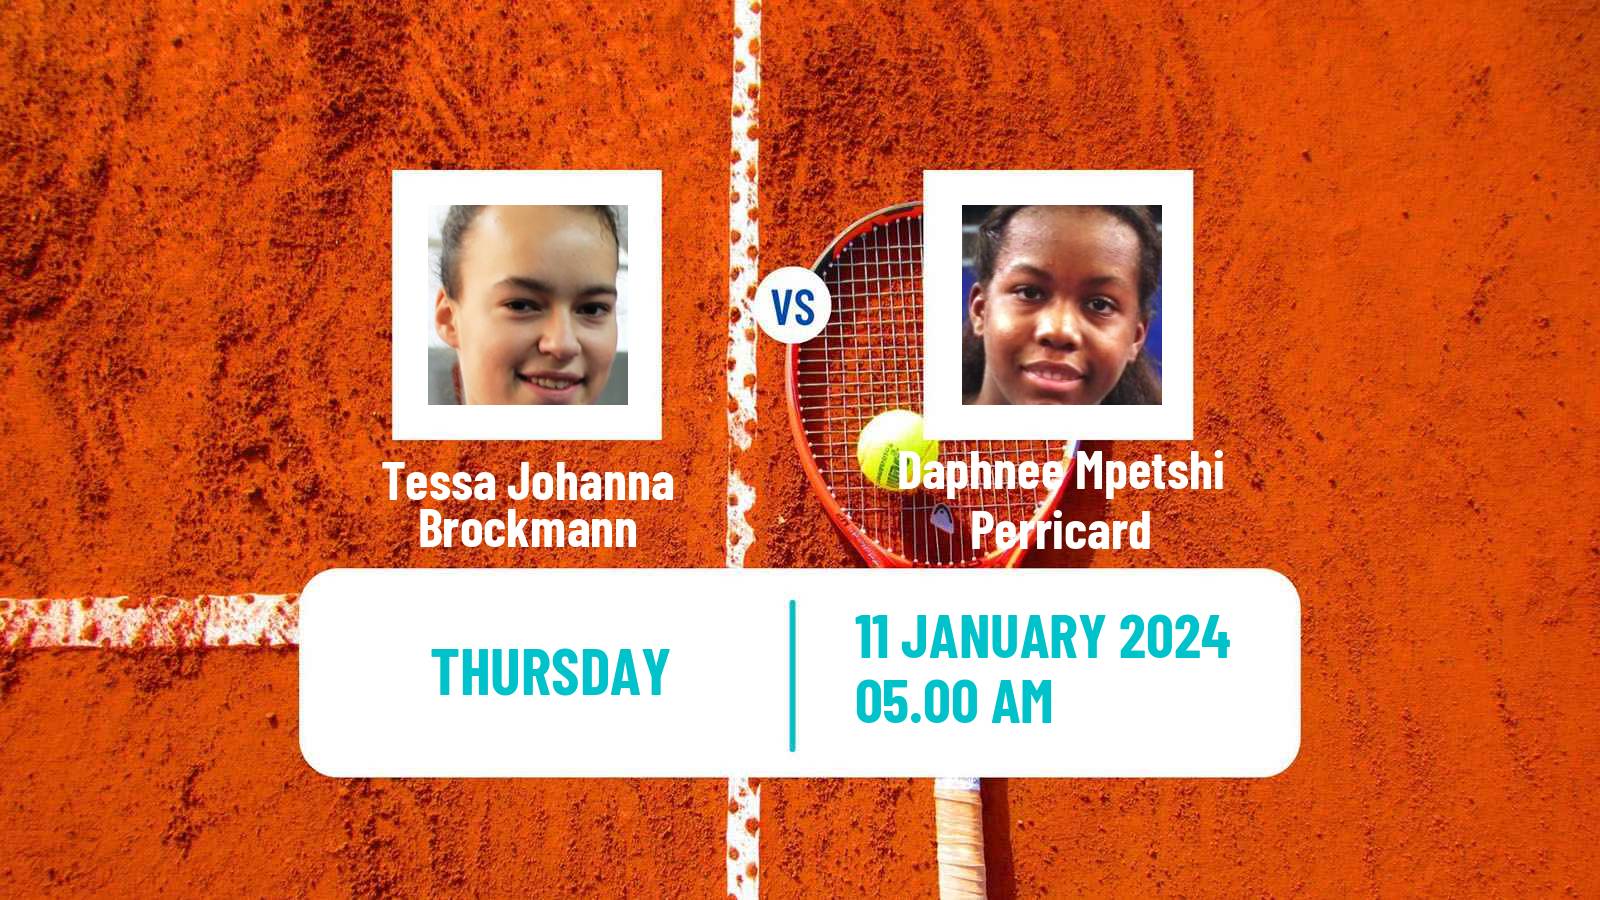 Tennis ITF W15 Monastir 2 Women Tessa Johanna Brockmann - Daphnee Mpetshi Perricard